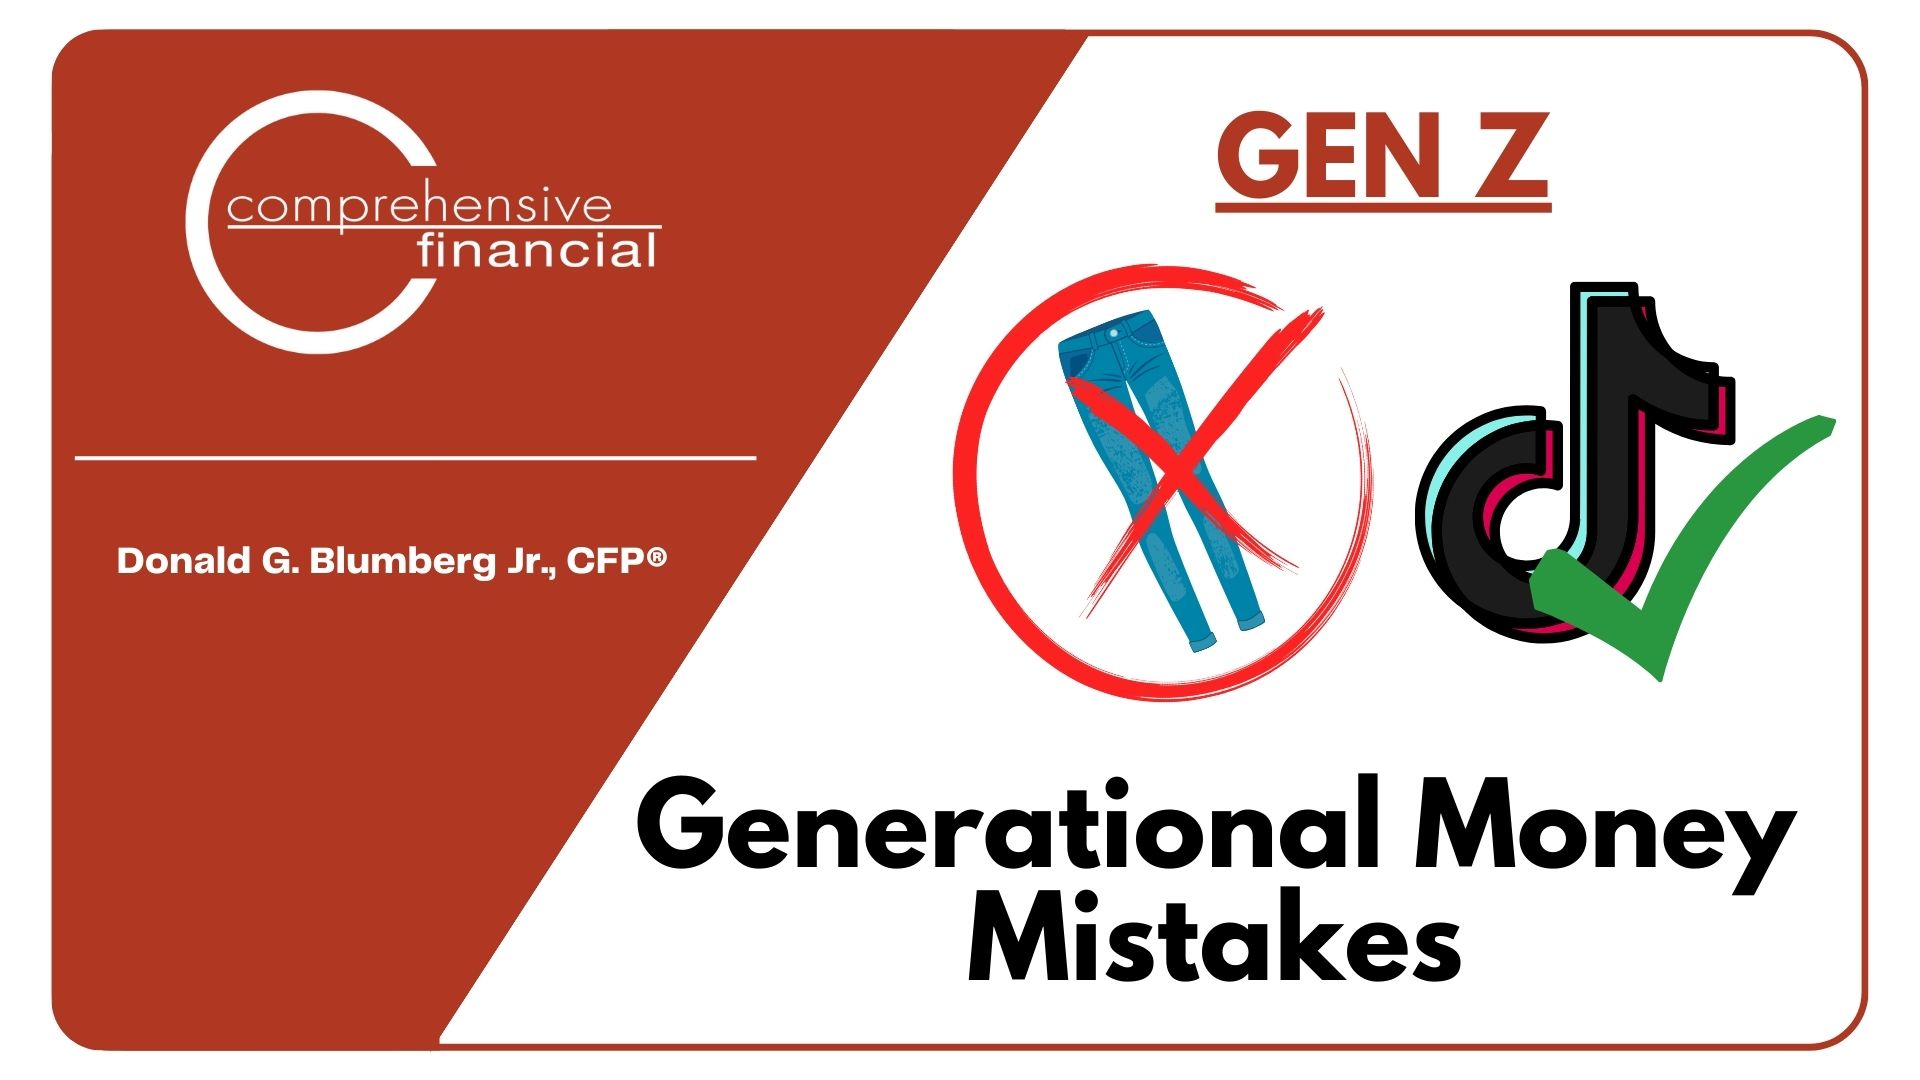 Gen Z: Generational Money Mistakes